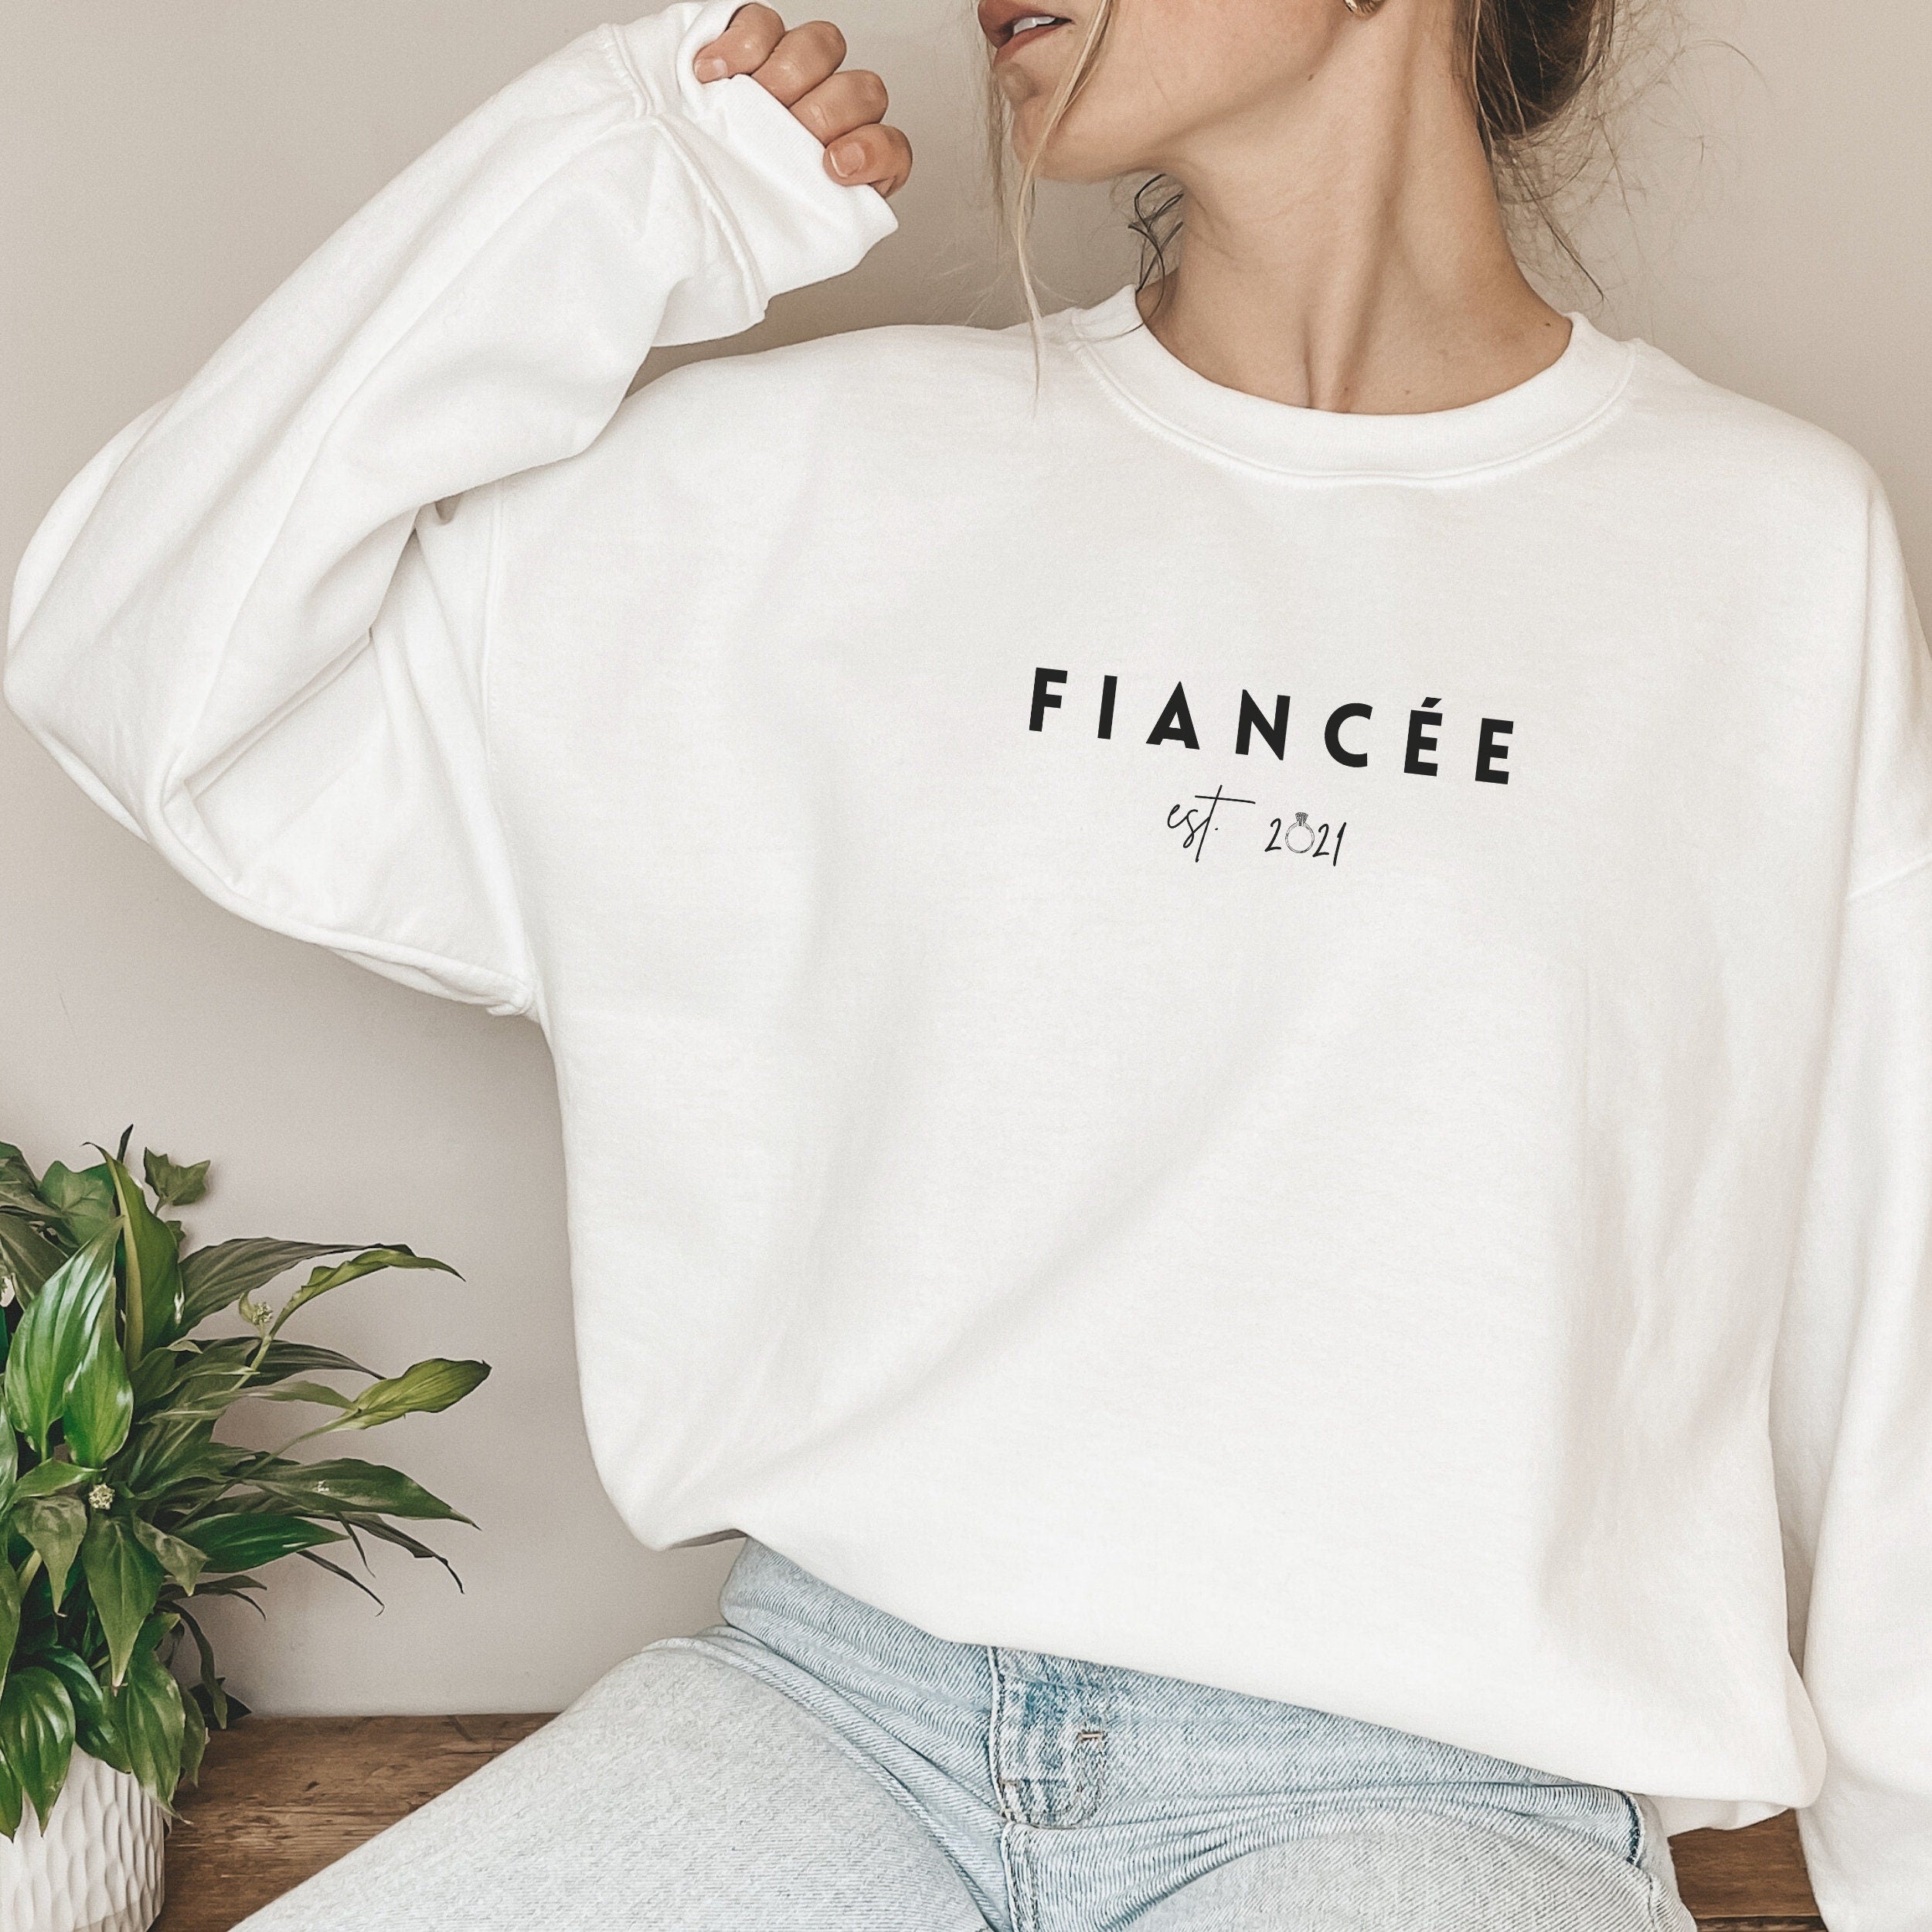 Fiancé Year Sweatshirt (His)